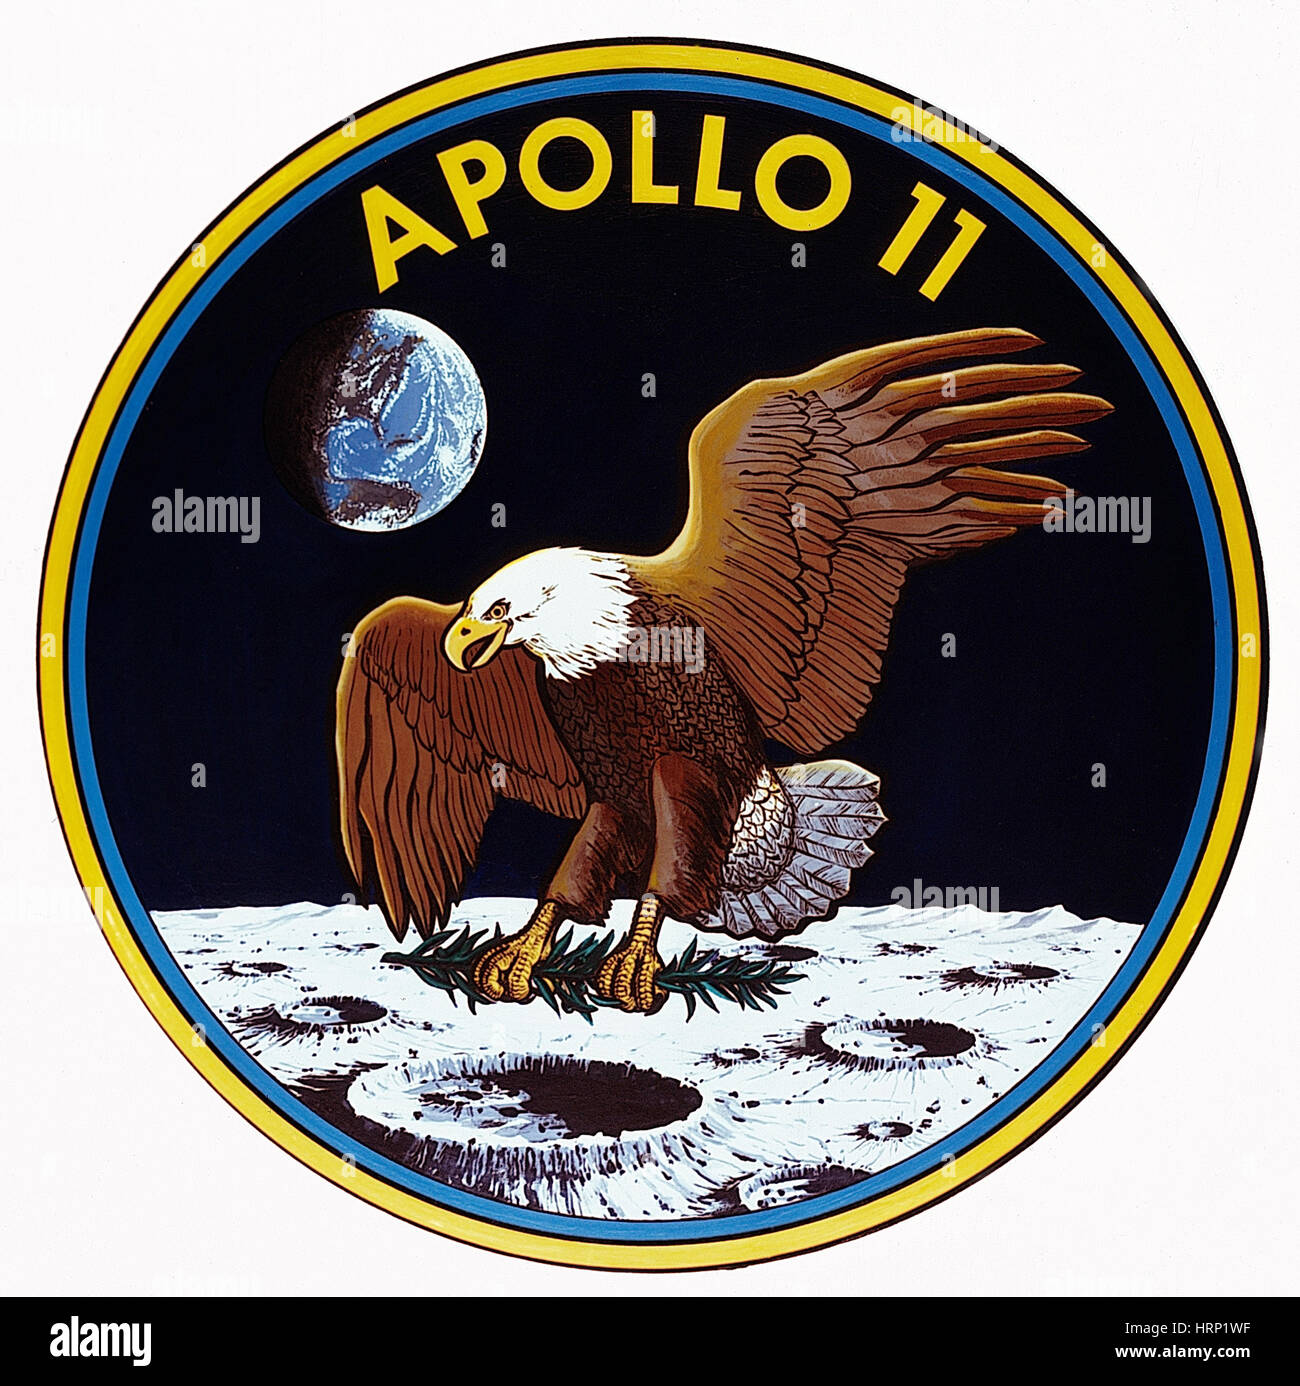 Apollo 11, Mission Patch Stock Photo